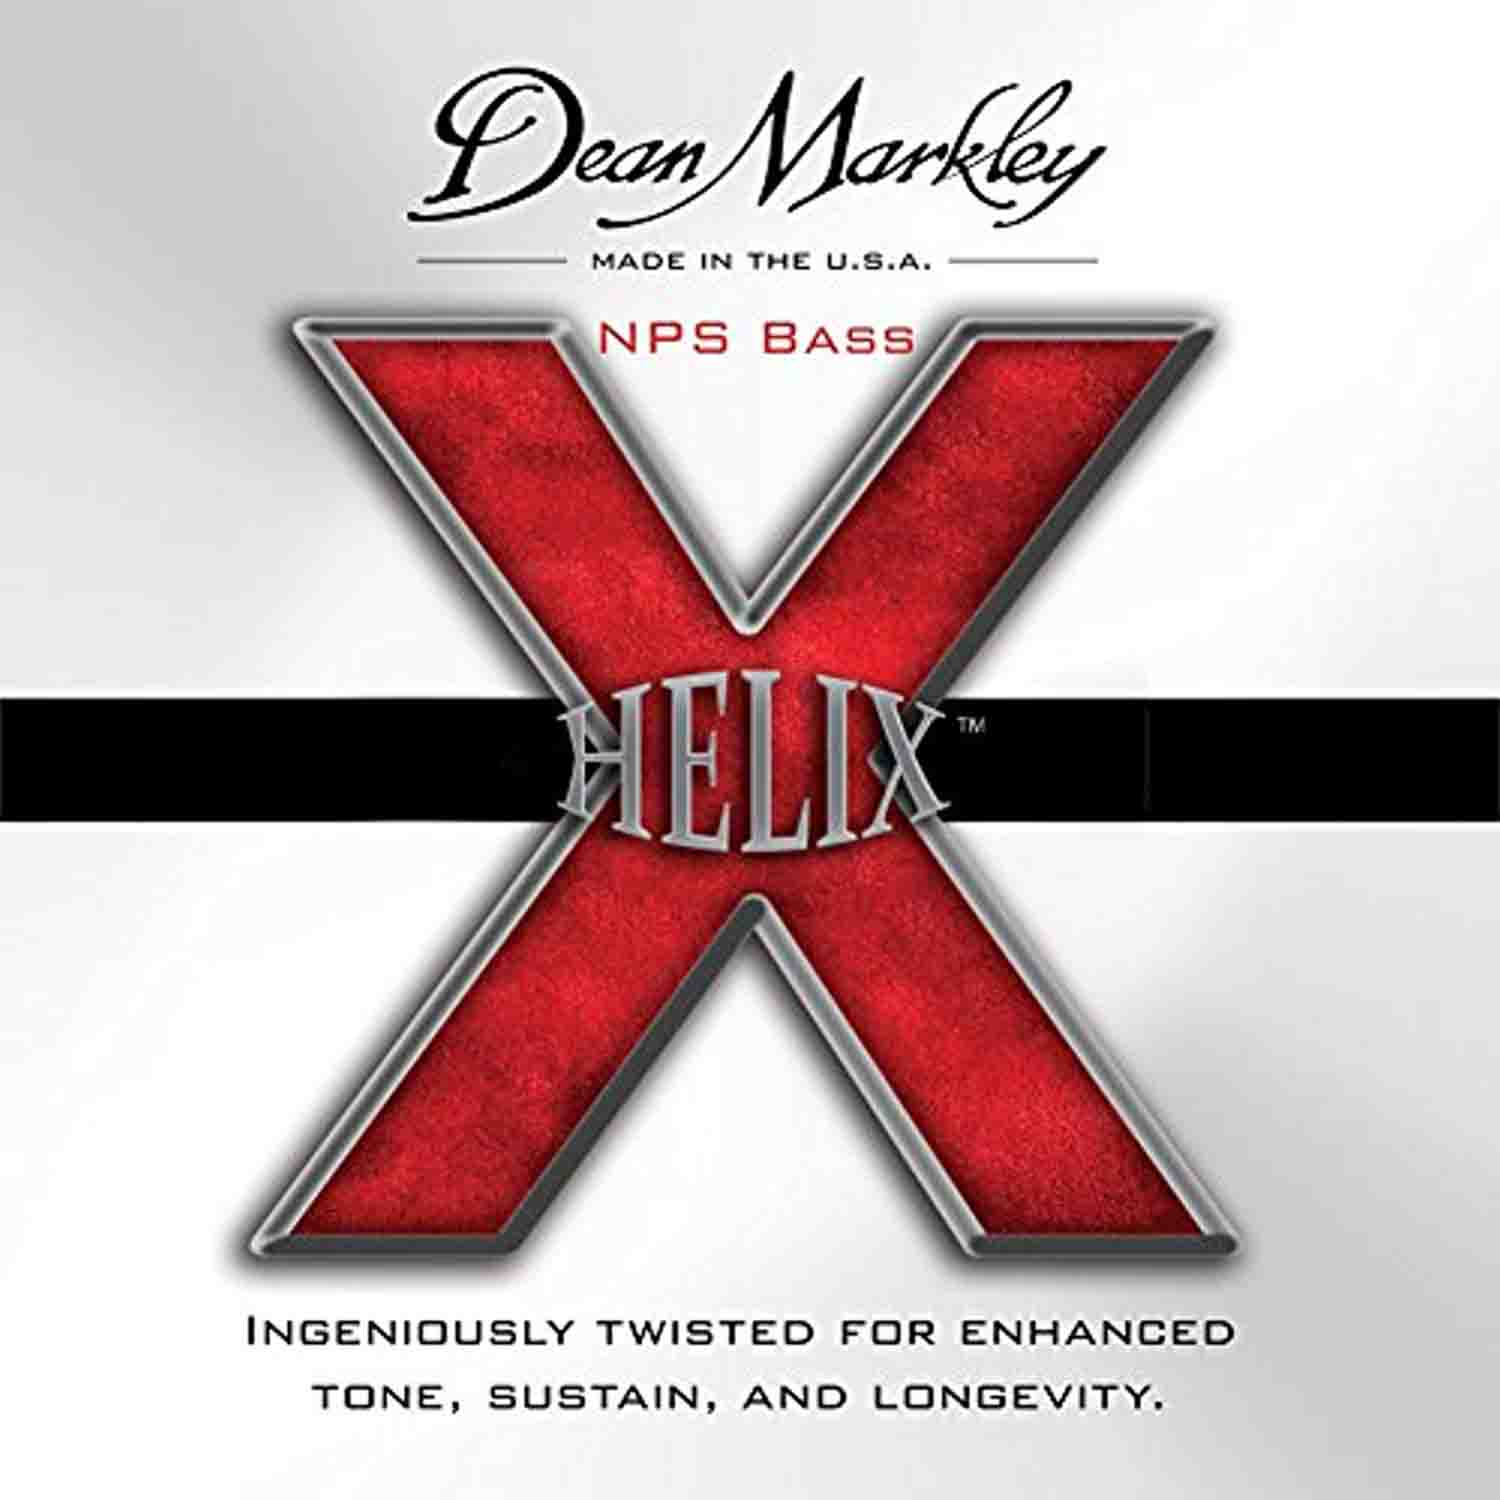 Dean Markley DM-2612 Helix NPS Bass Guitar Strings (50-105 Gauge, 4-String Set) - Hollywood DJ